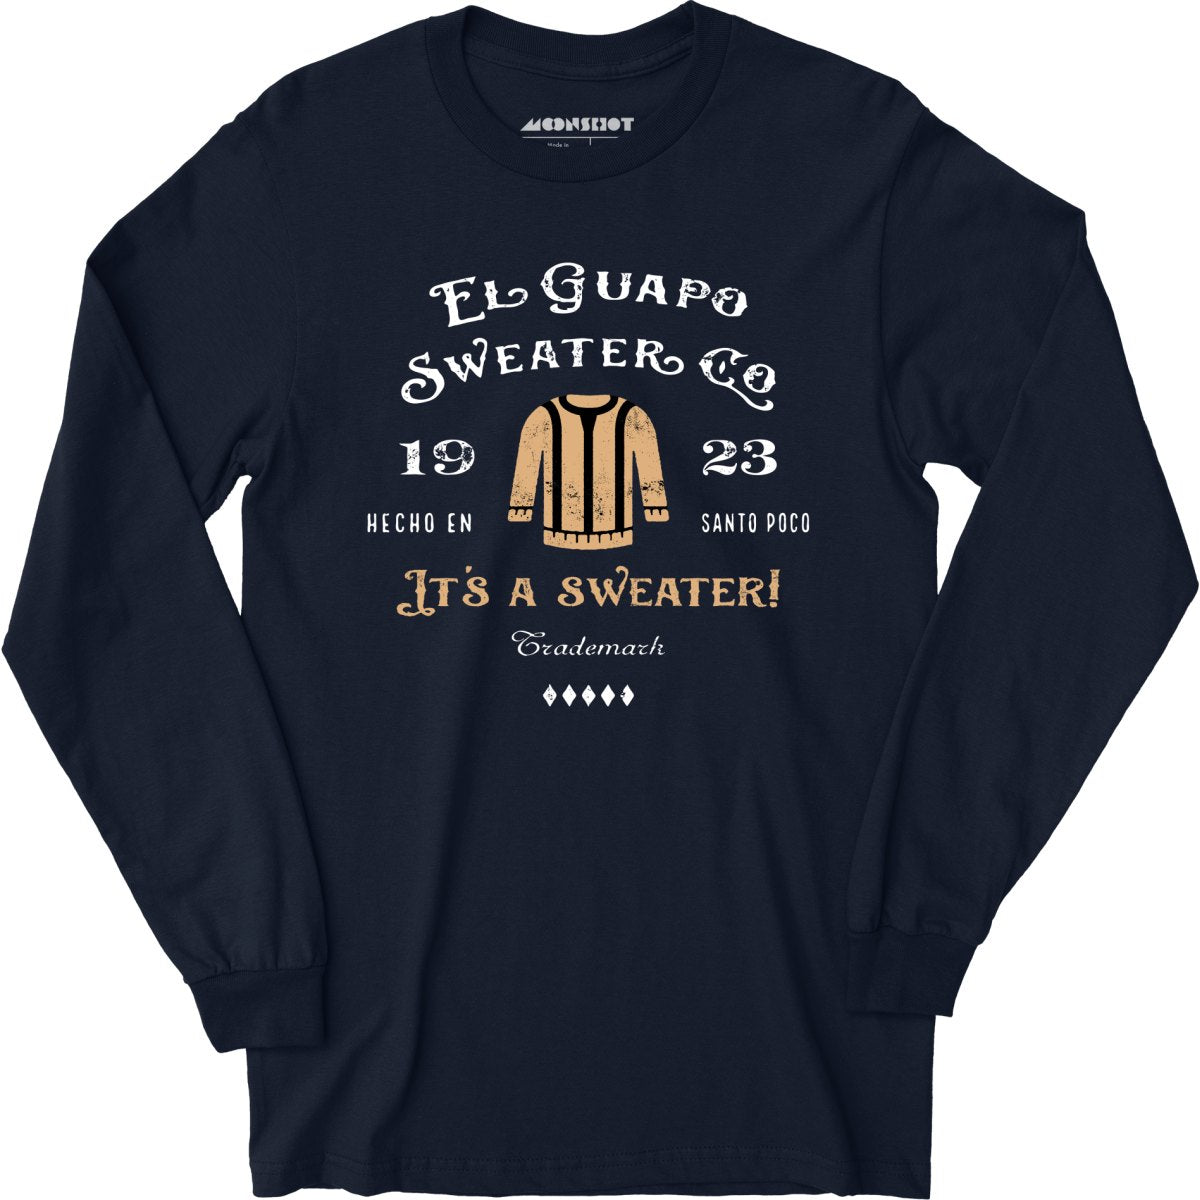 El Guapo Sweater Co. - Long Sleeve T-Shirt